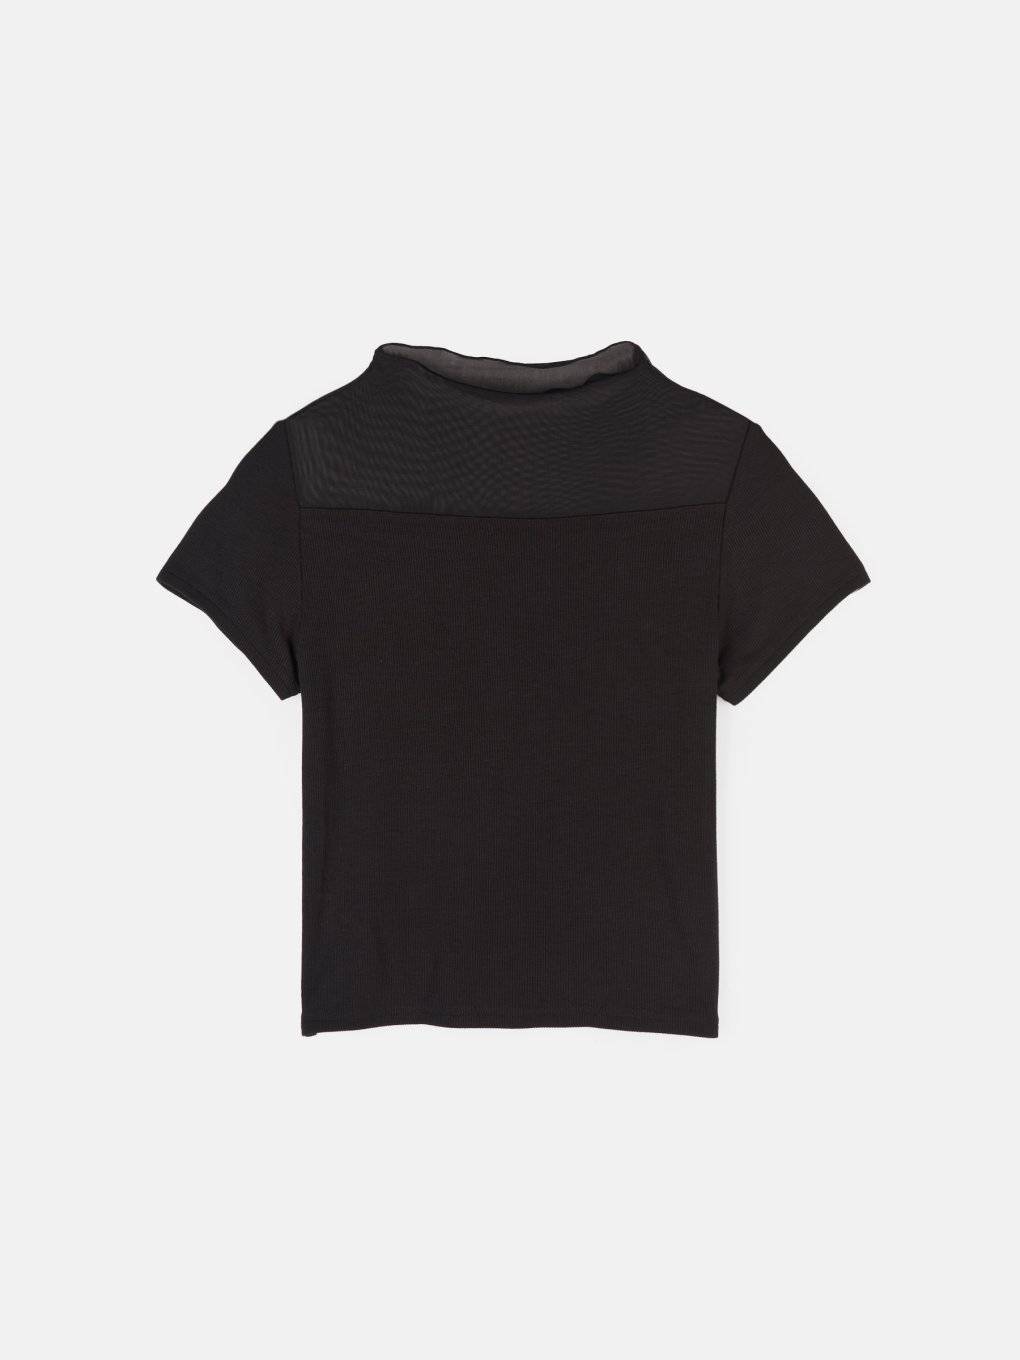 Shortsleeve t-shirt with mesh